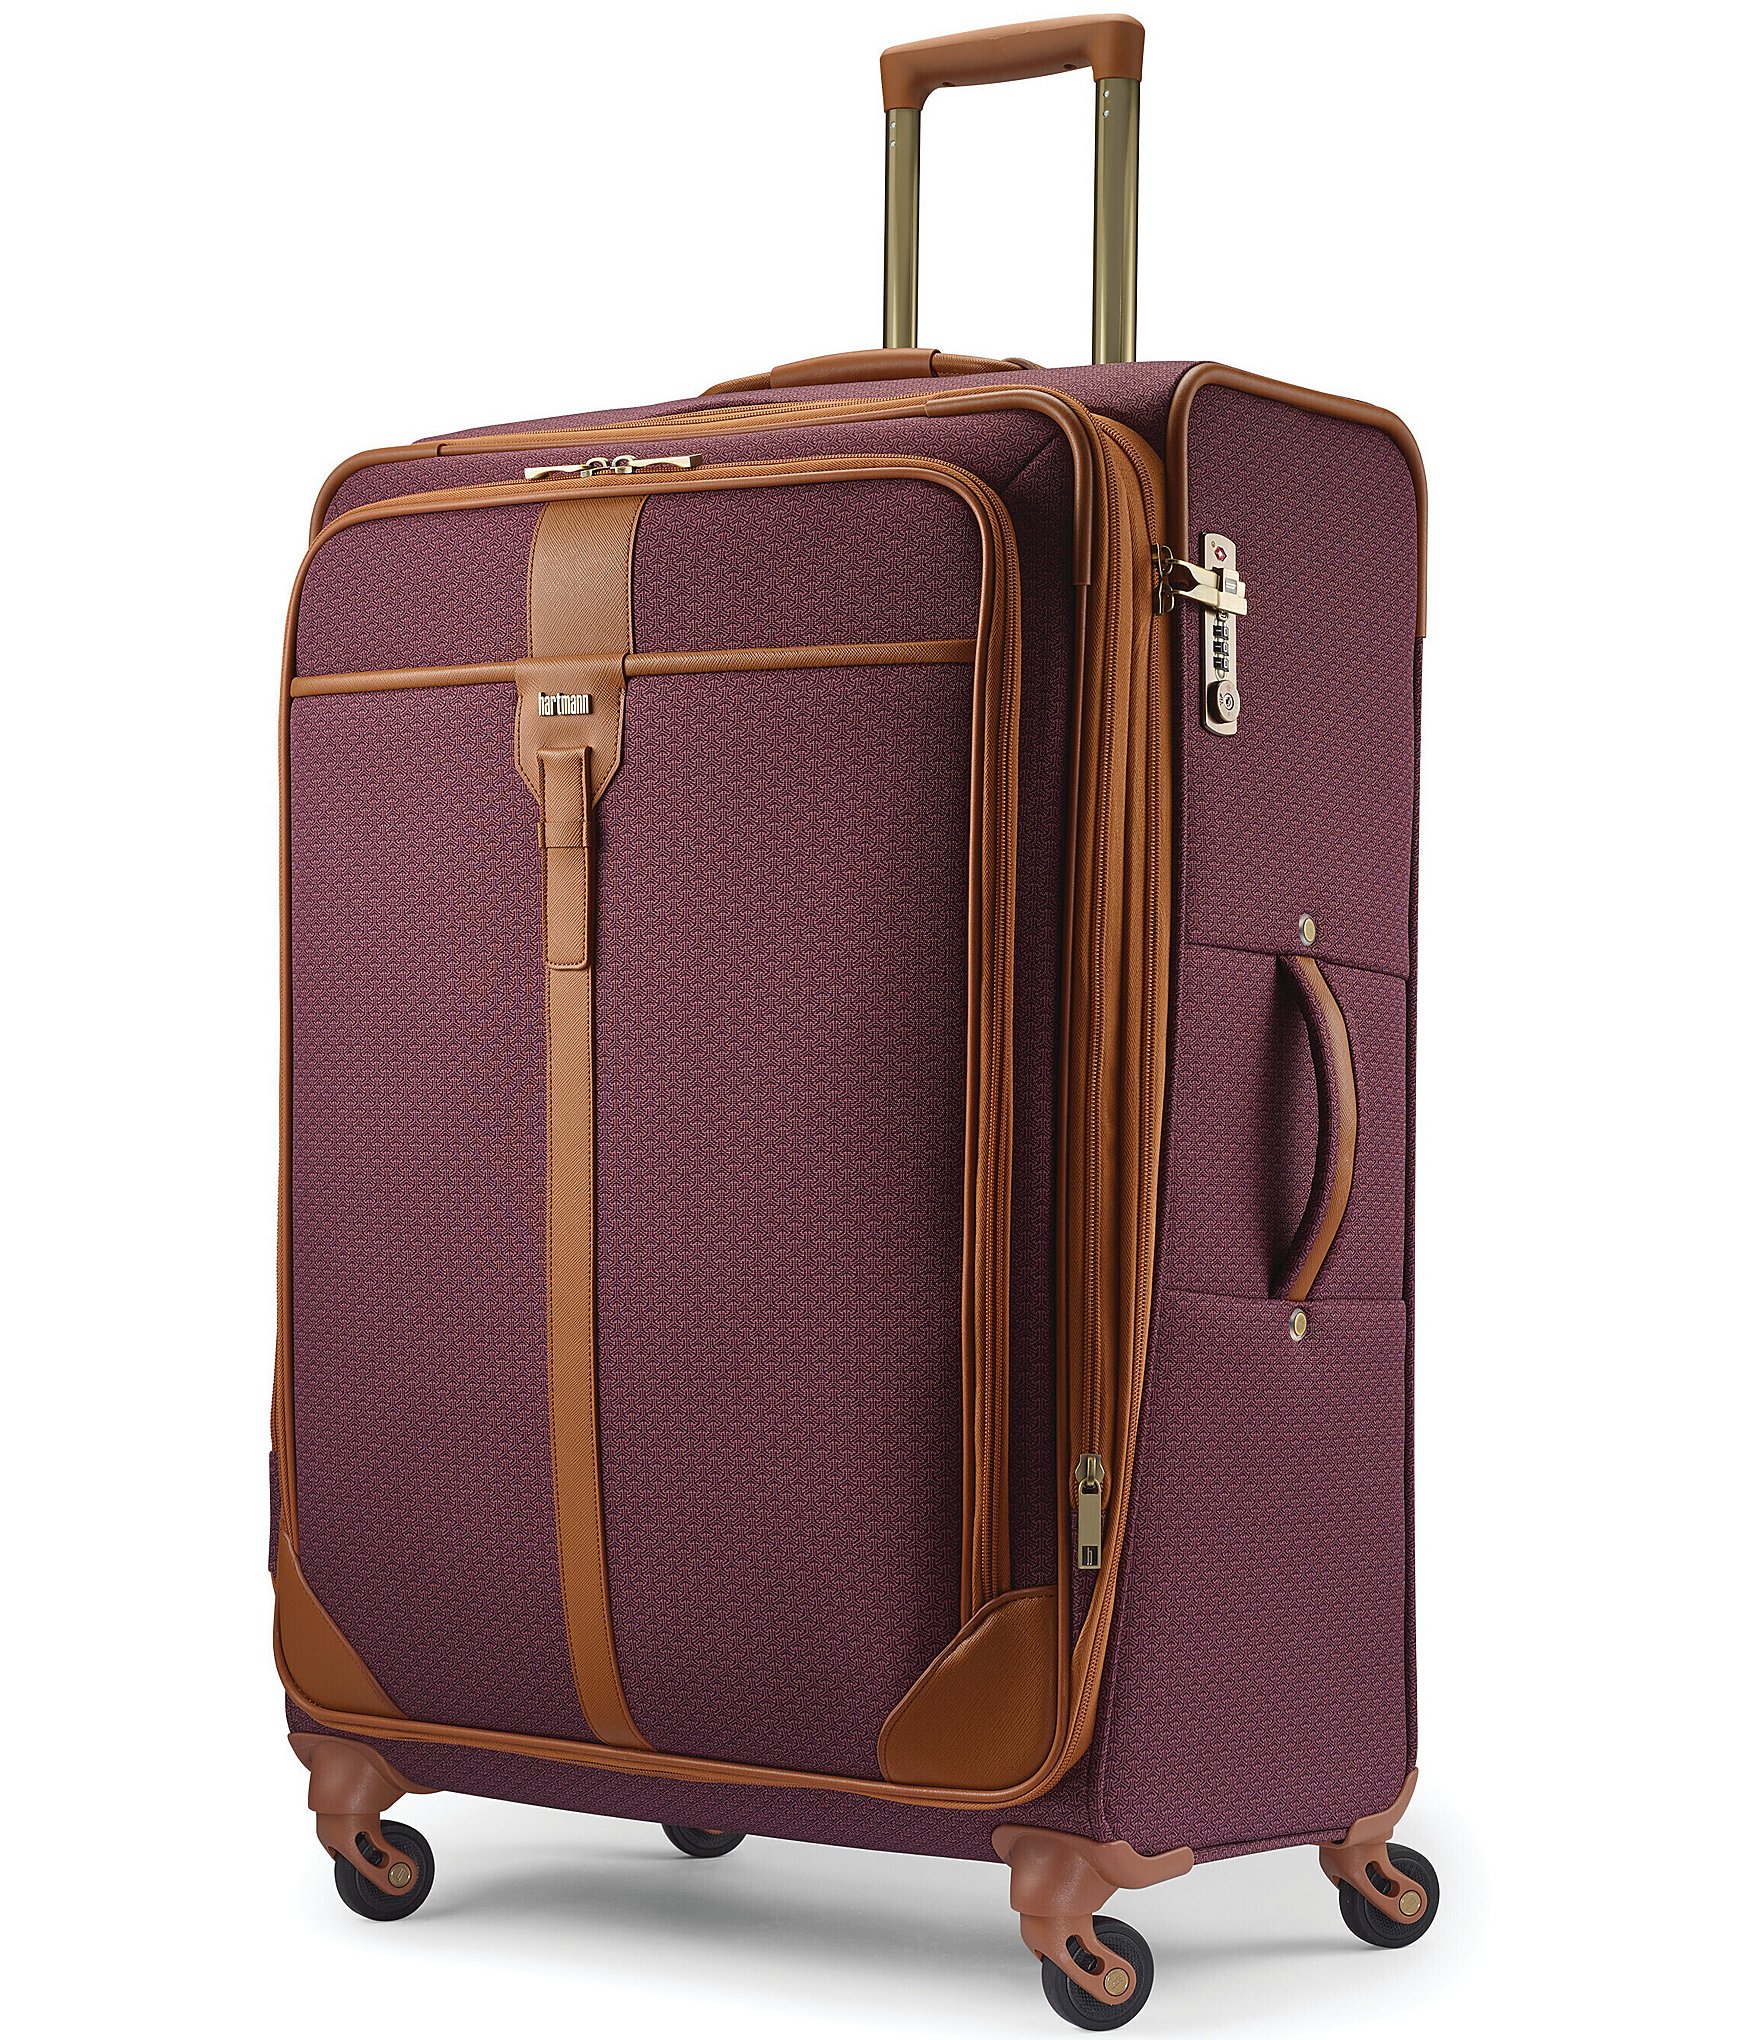 Hartmann luggage, Bags